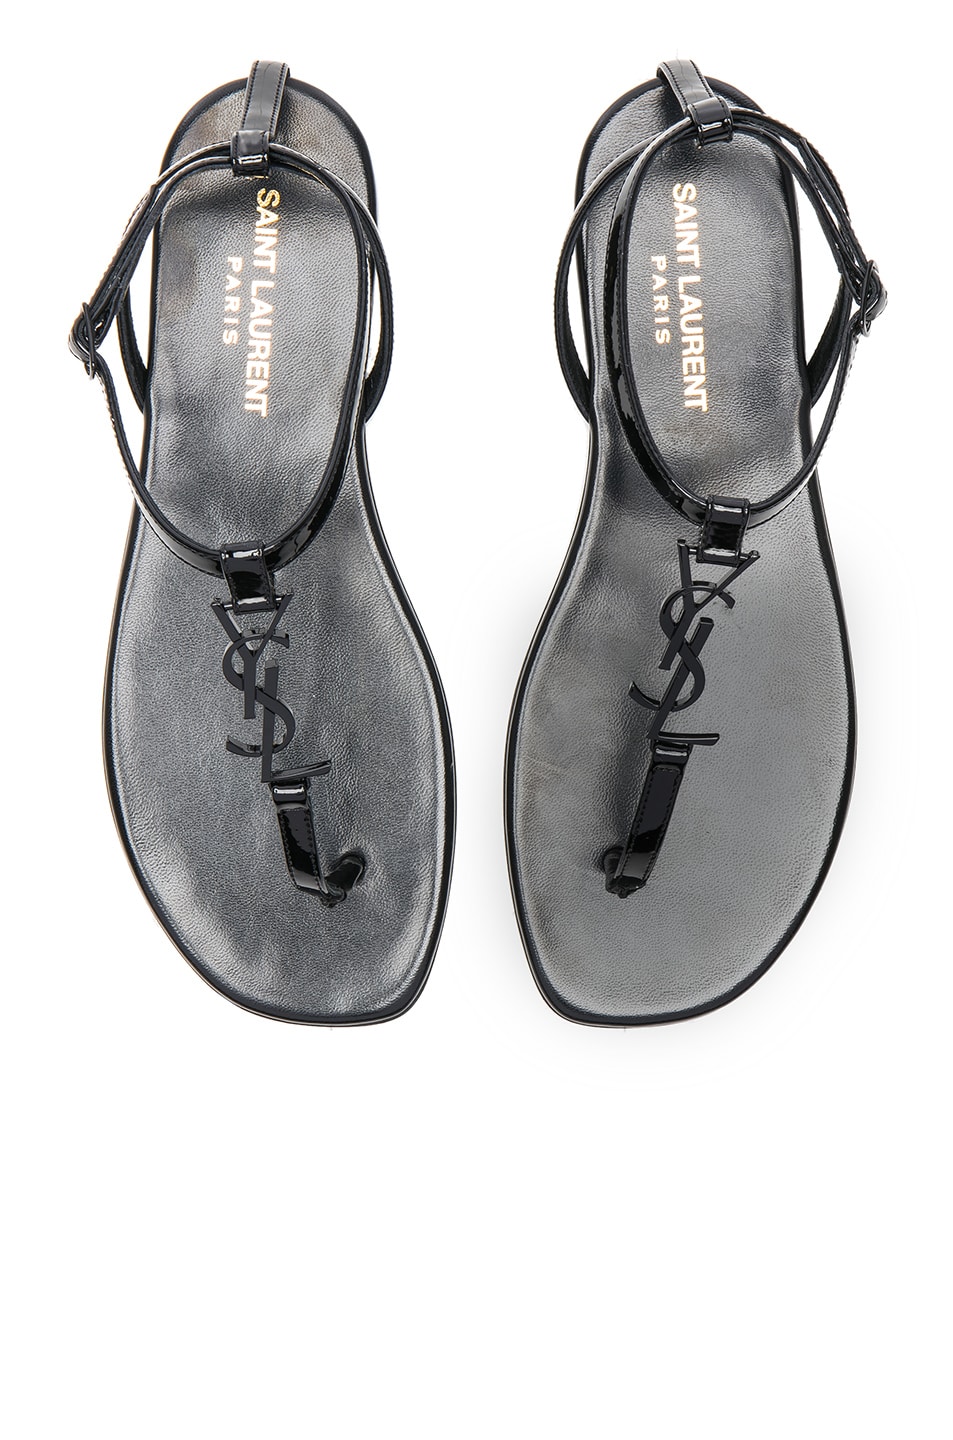 Saint Laurent Patent Leather Nu Pieds Sandals in Black | FWRD